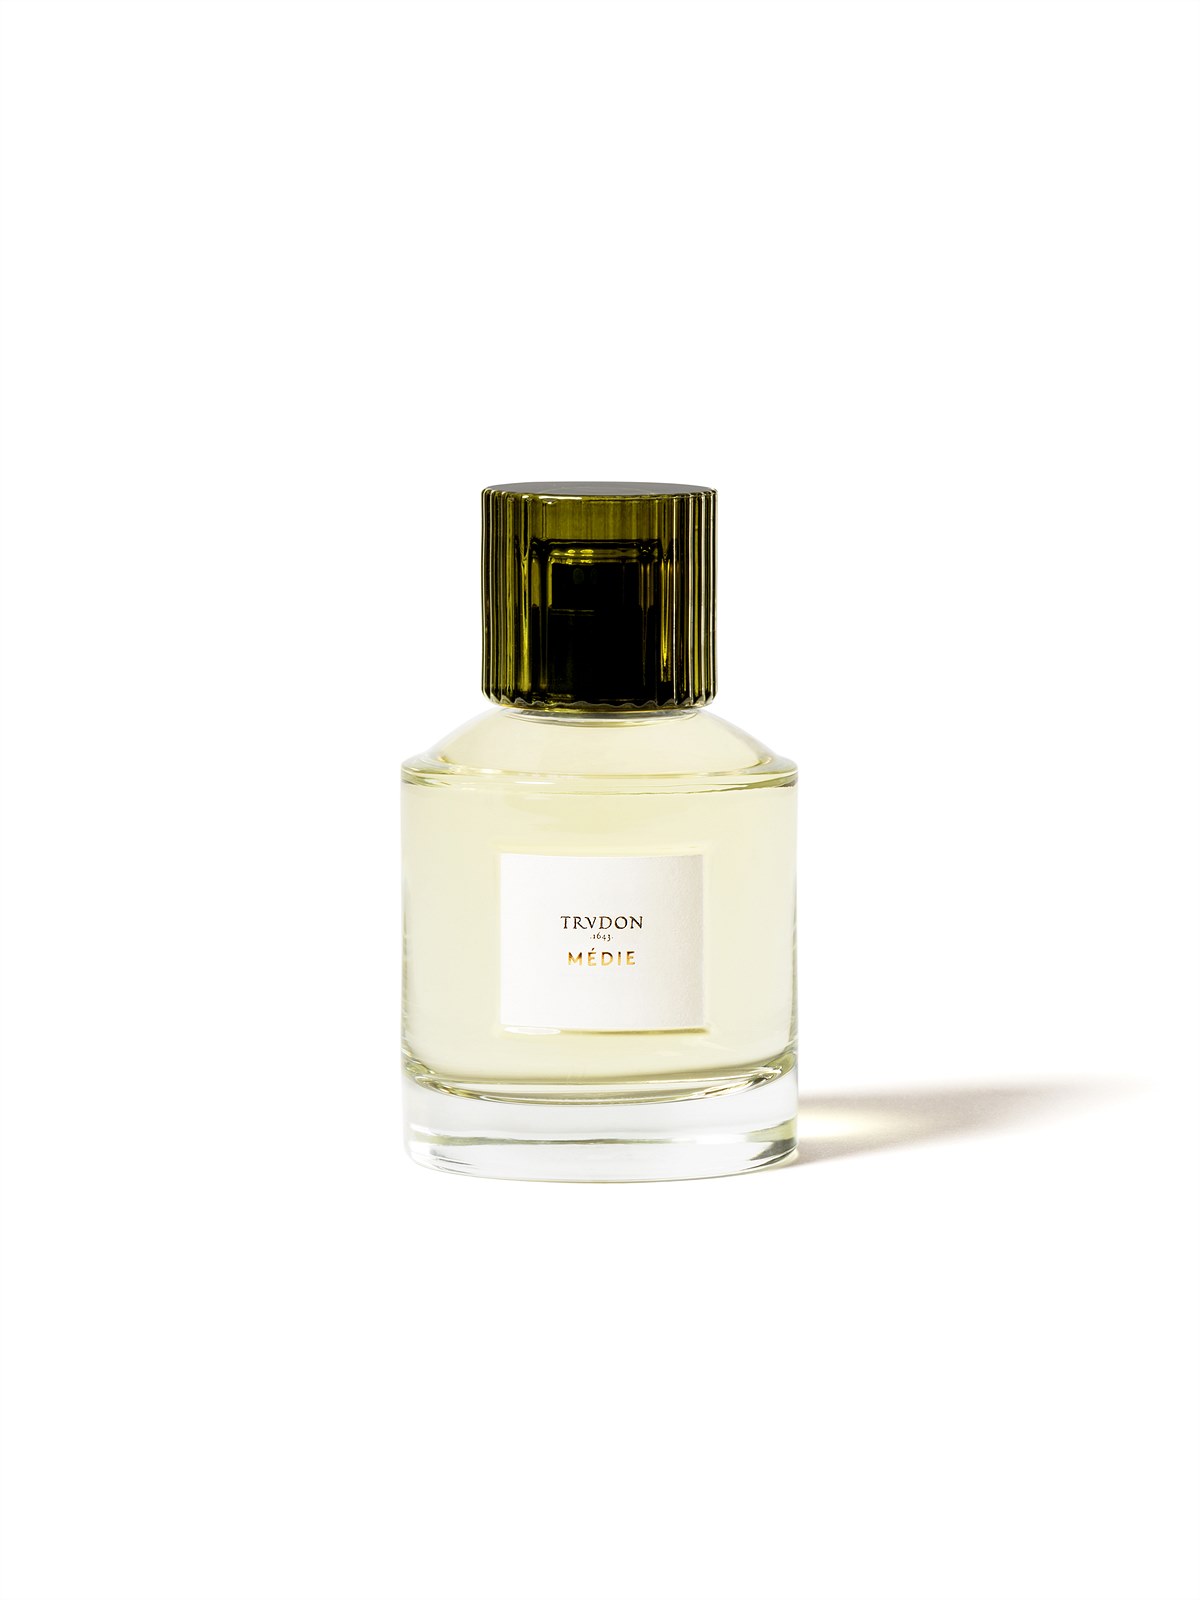 Trudon Parfums -Flacon Medie - 300dpi